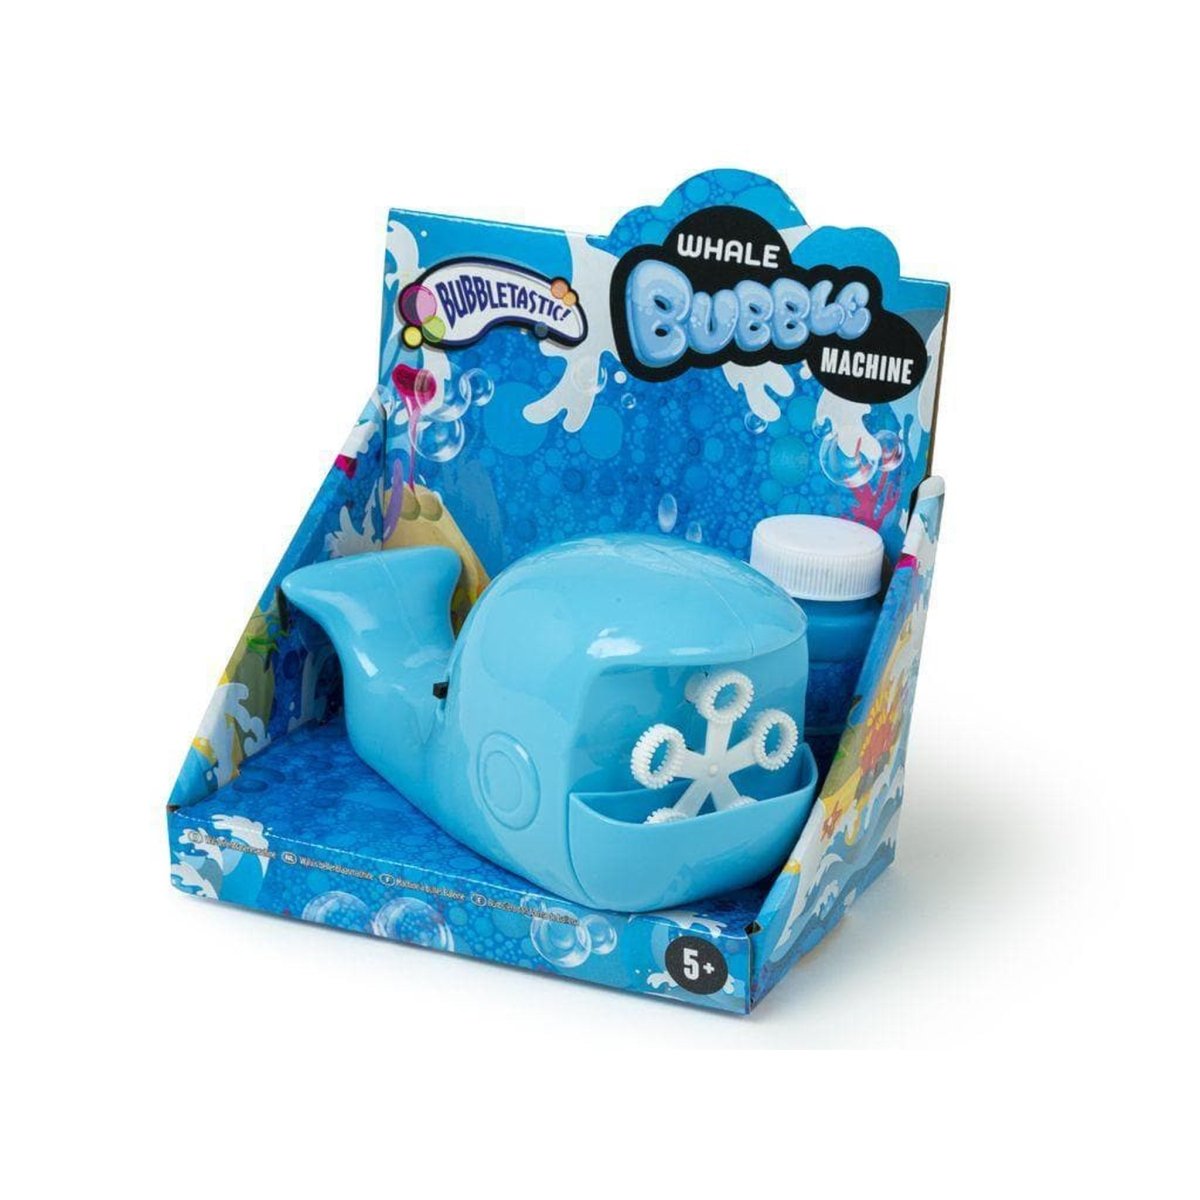 Whale Bubble Machine - Kids Party Craft